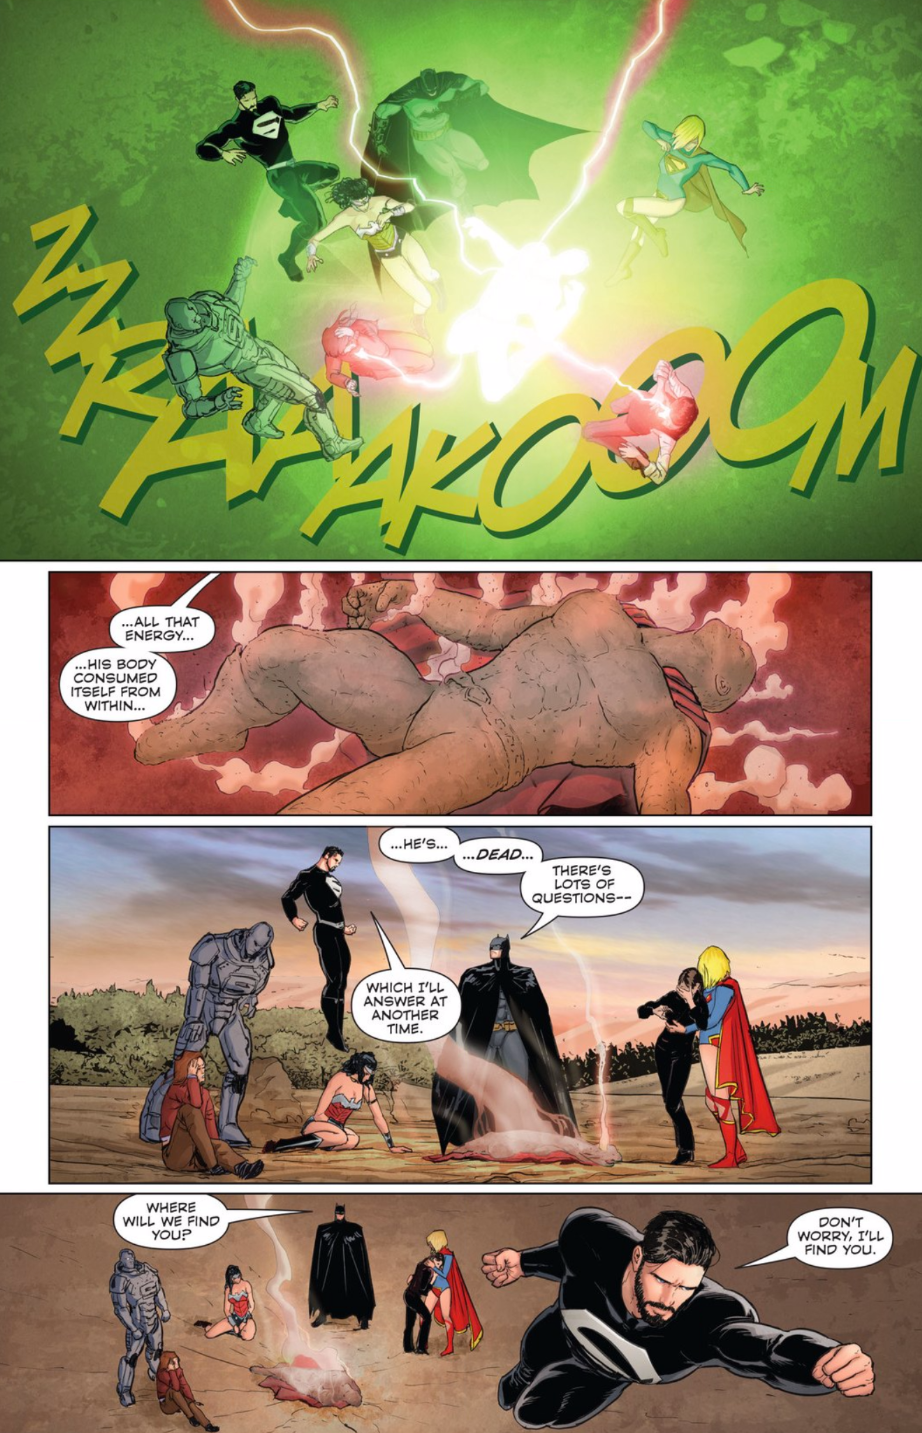 41 - [DC Comics] Superman: Discusión General - Página 10 Pmxp5wkhym7m6rtysmbn